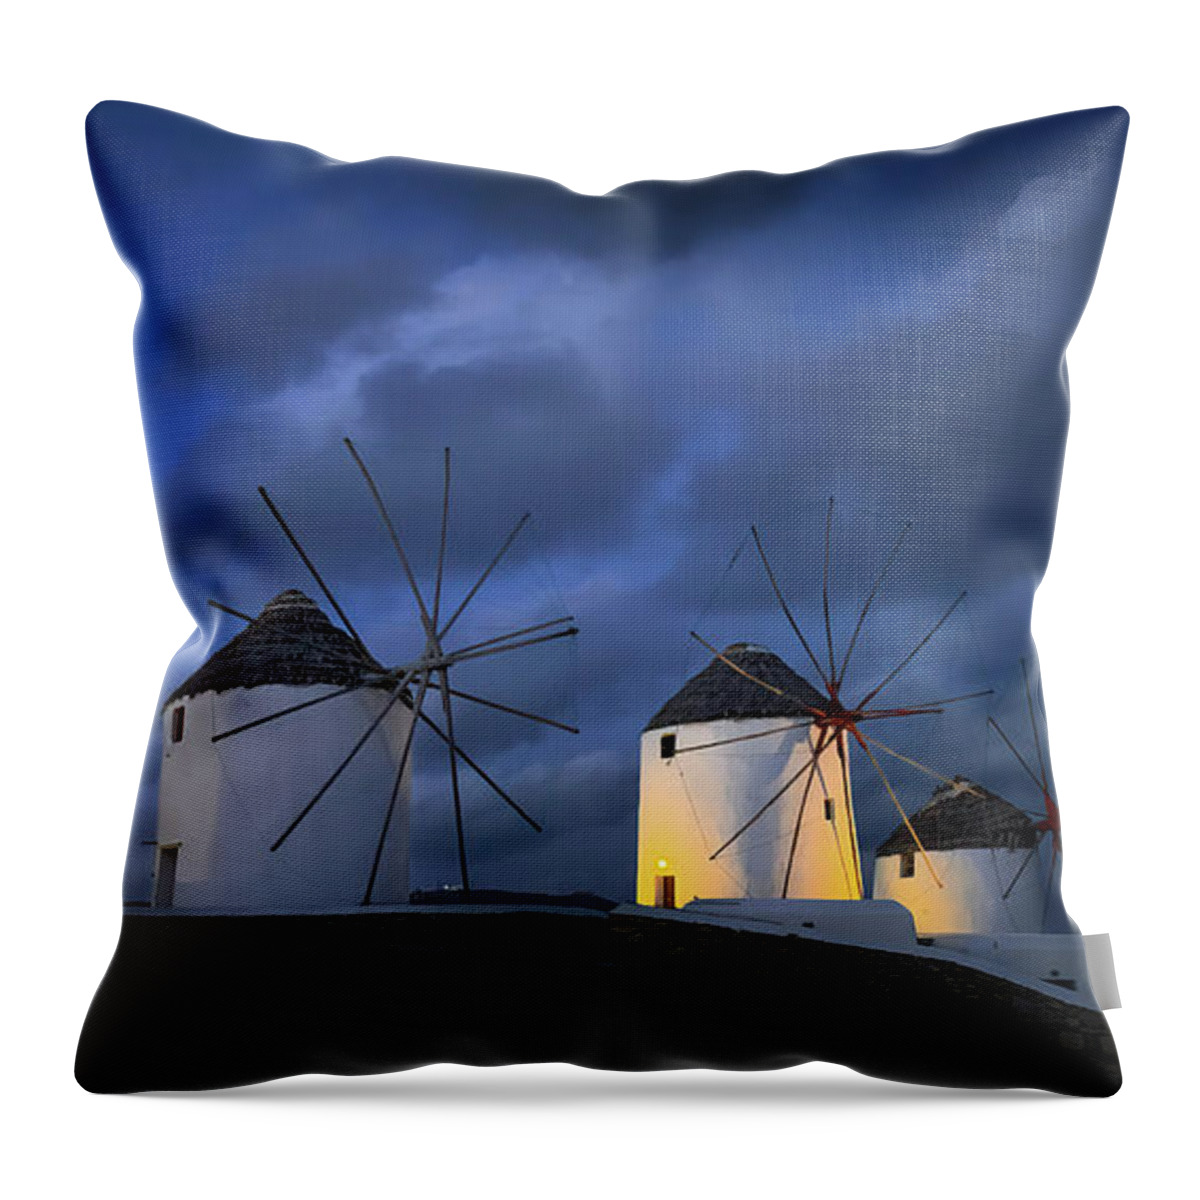 Mykonos Windmills Throw Pillow featuring the photograph Mykonos Windmills by Rebecca Herranen